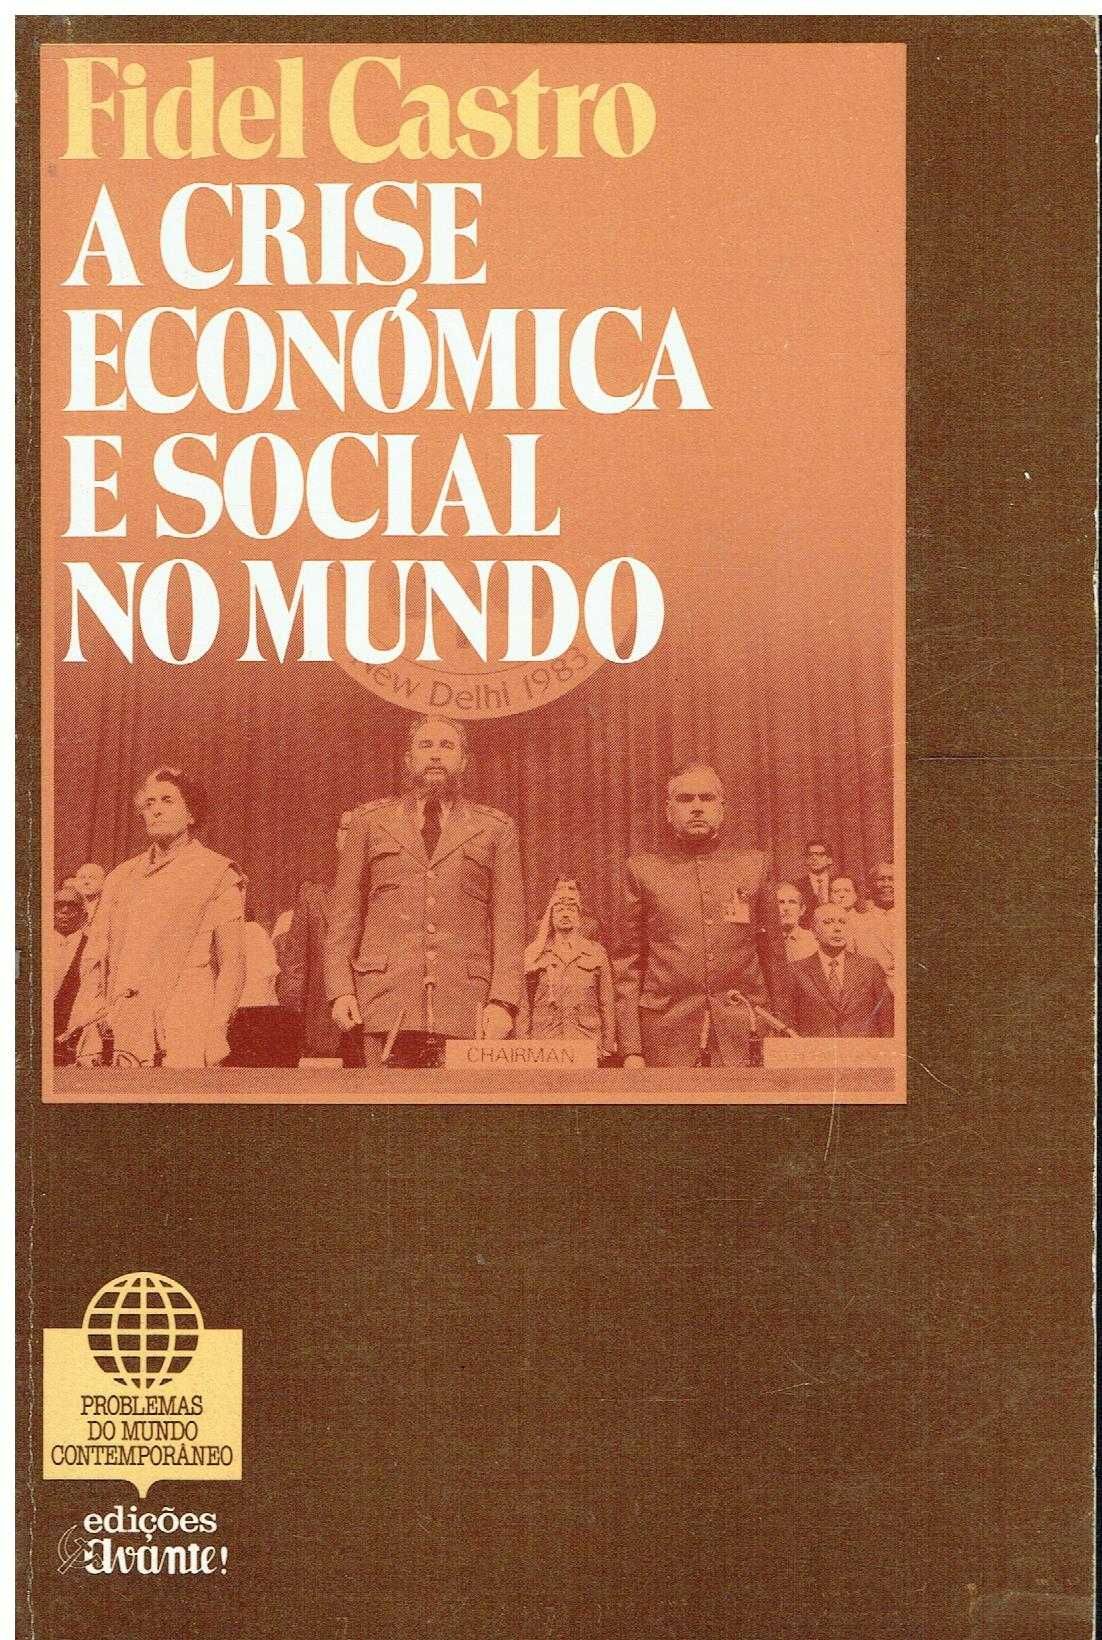 12562
	
A crise económica e social no mundo 
de Fidel Castro